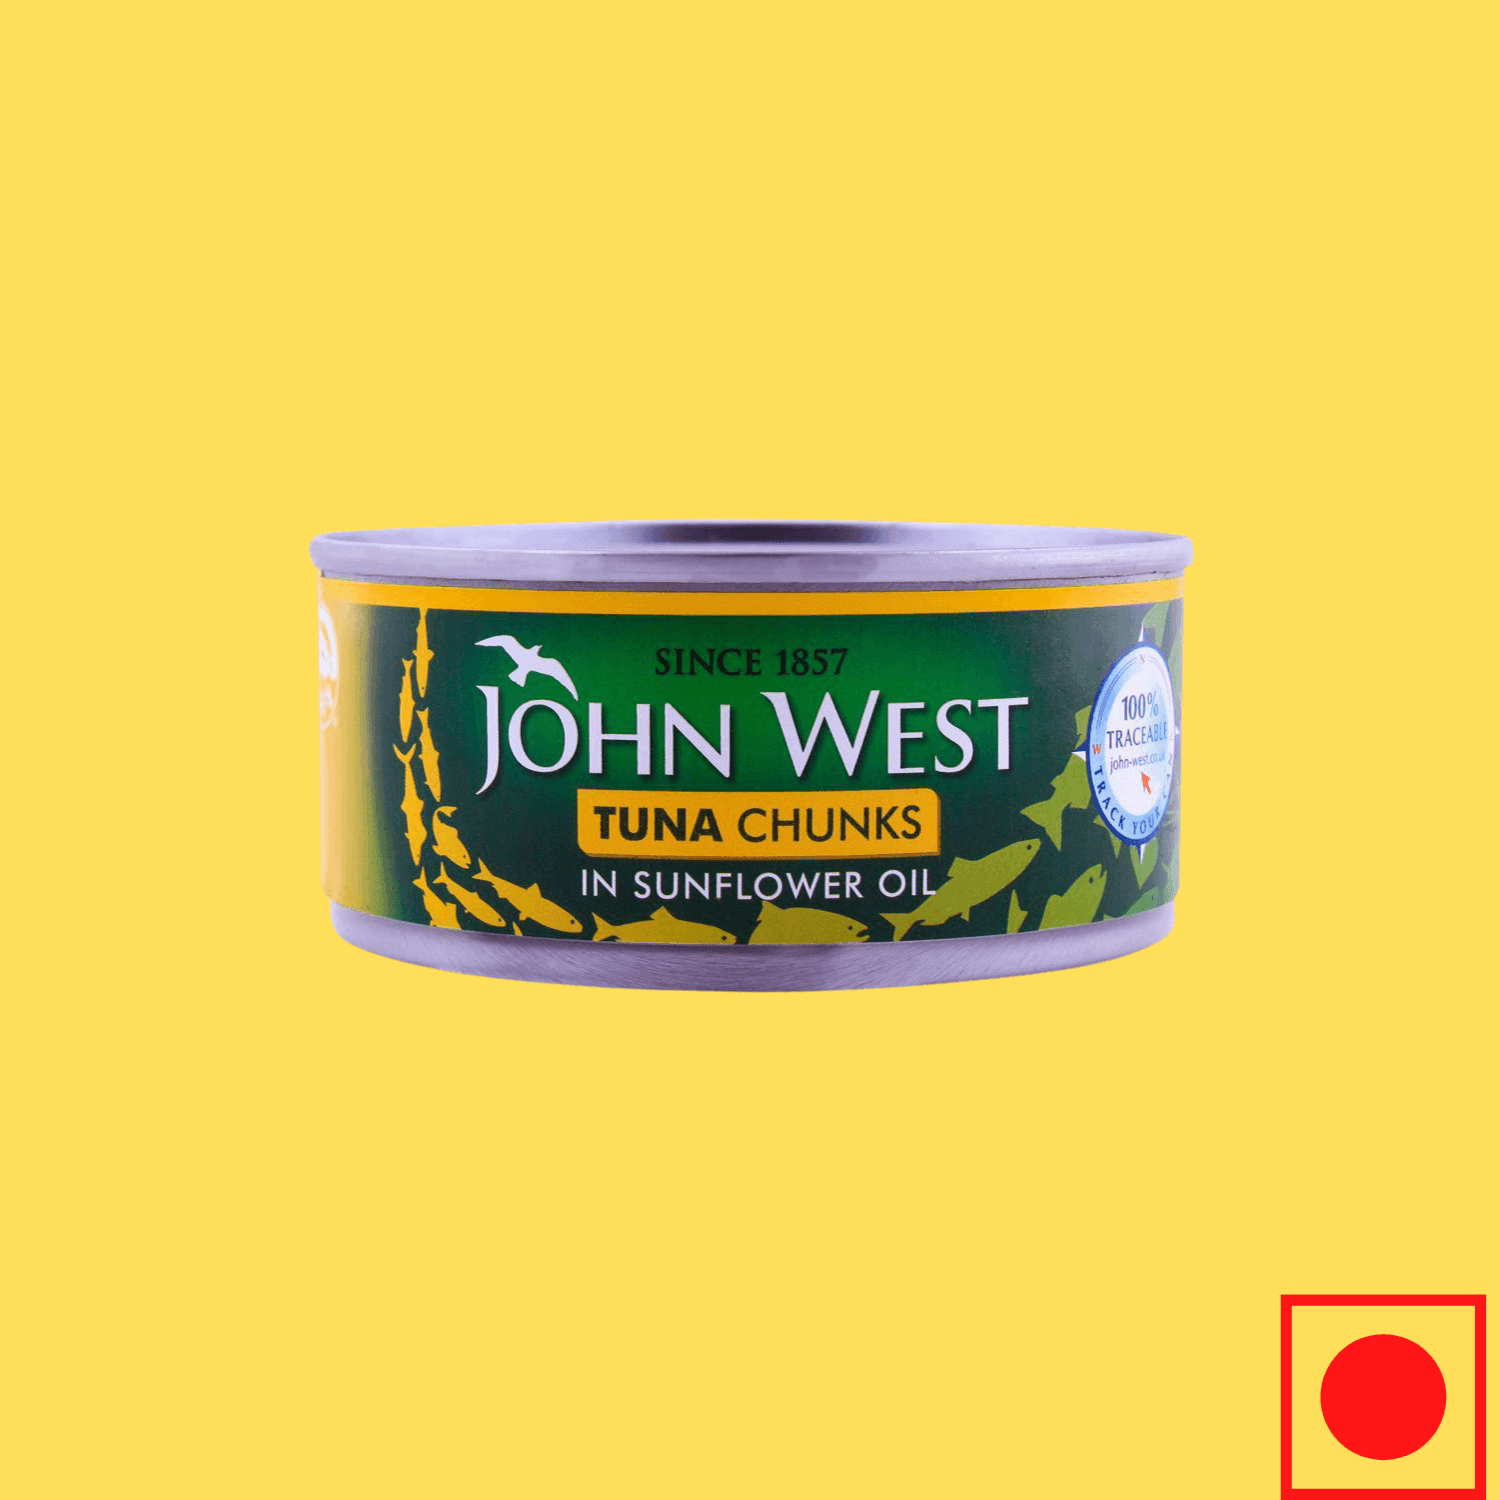 John West Tuna Chunks in Sunflower Oil, 185gm (Imported) - Super 7 Mart